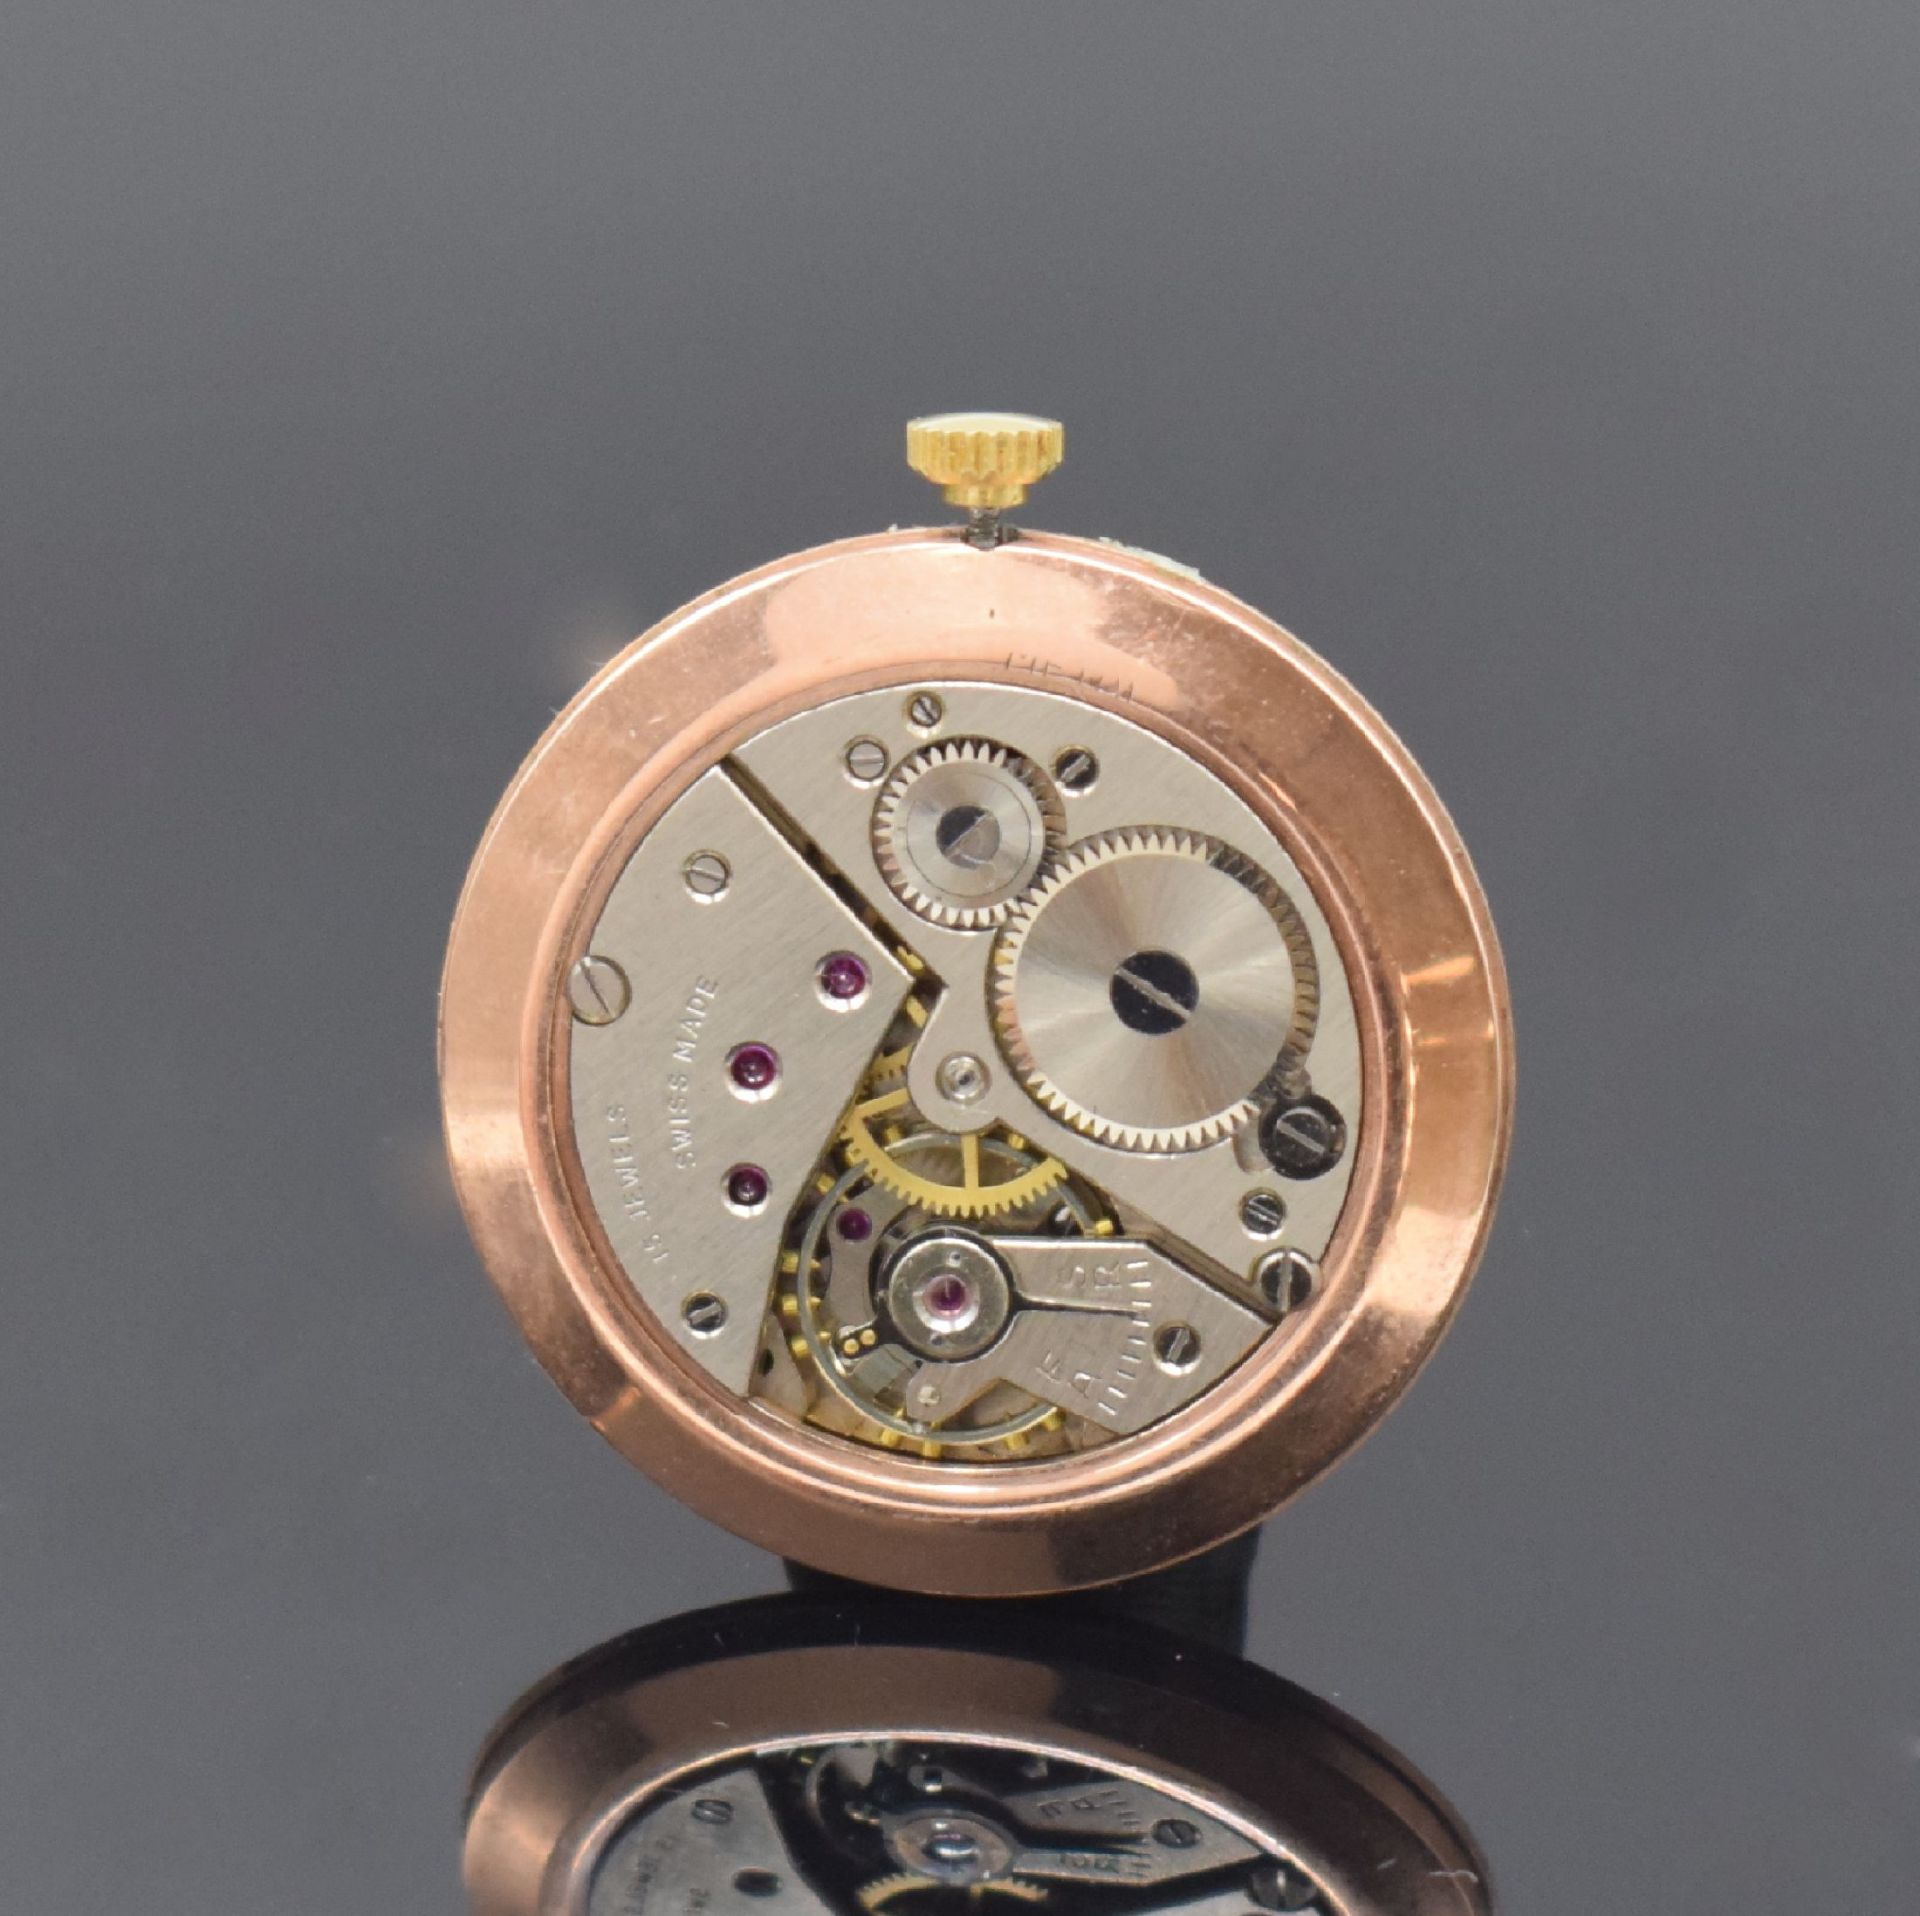 FRECO Armbanduhr in RoseG 750/000, Schweiz um 1950, - Image 5 of 5